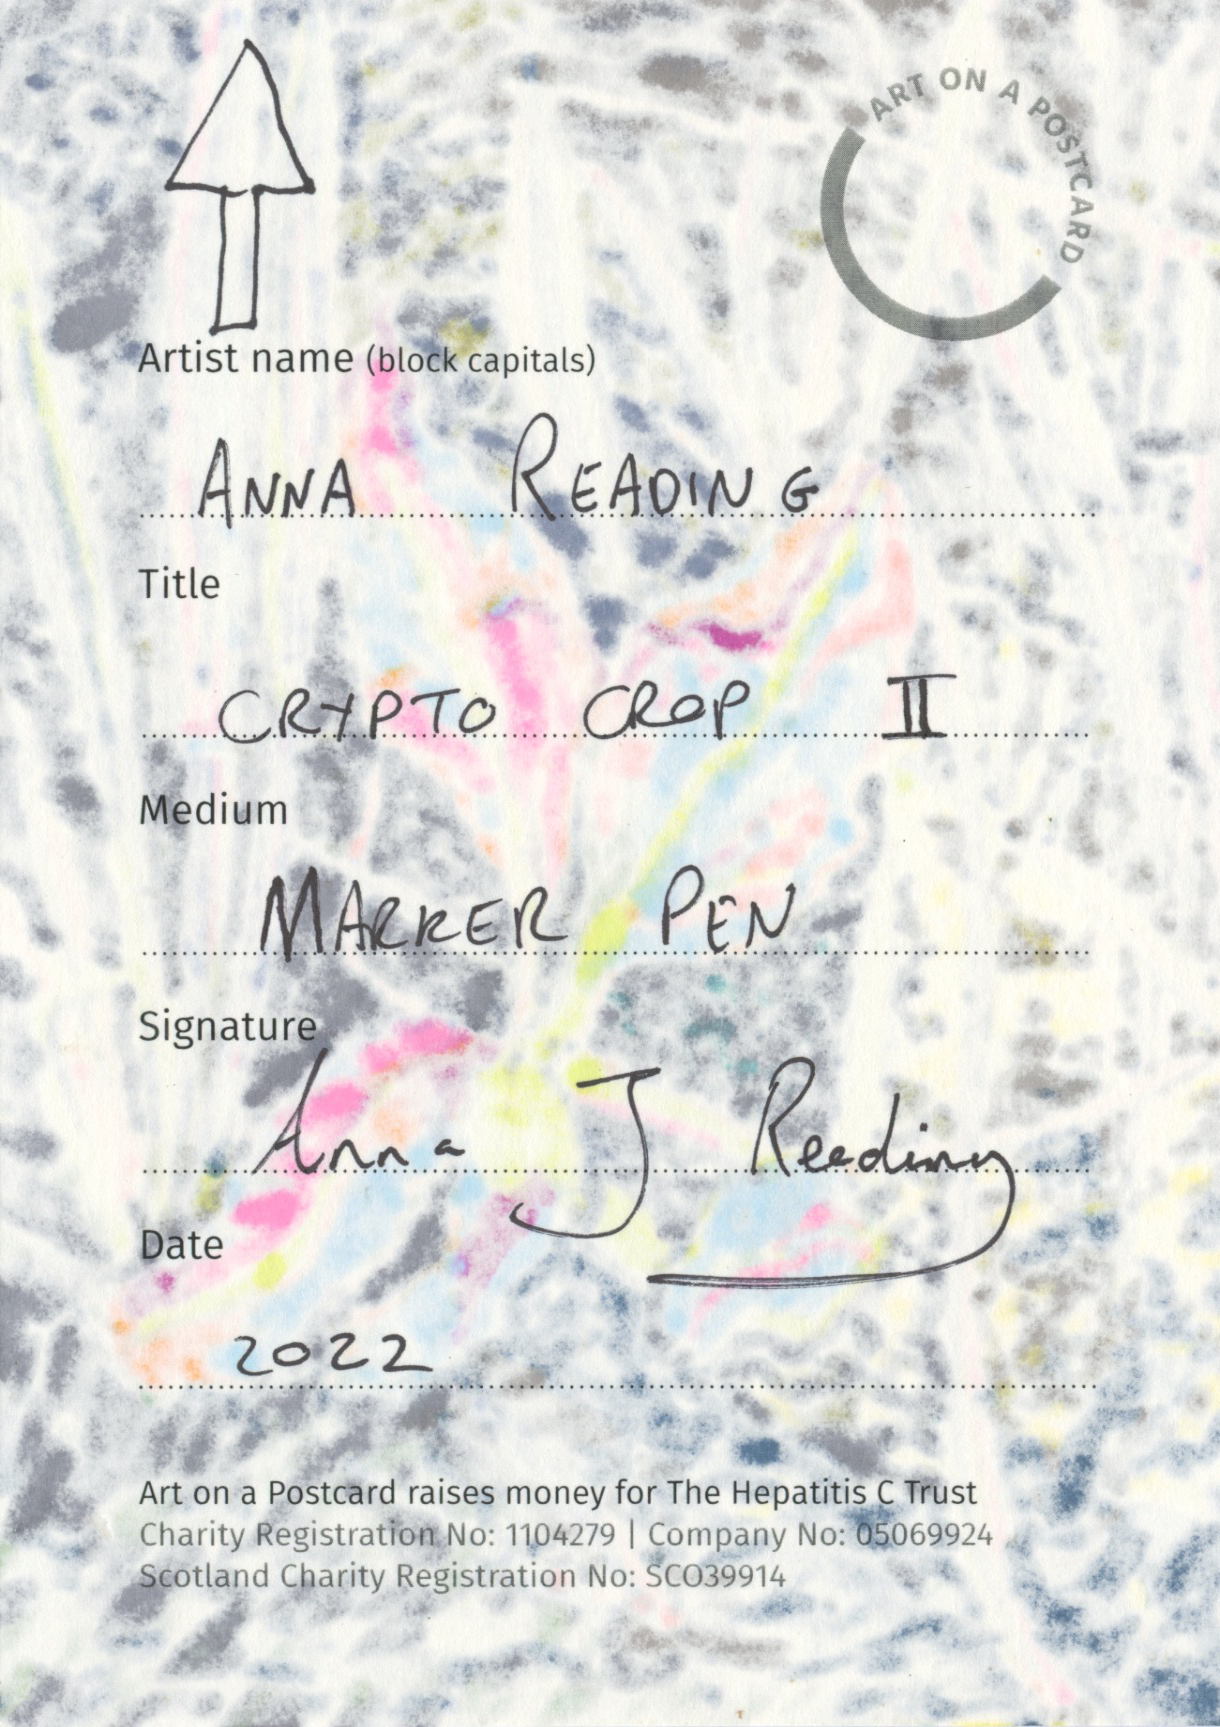 77. Anna Reading - Crypto Crop II - BACK